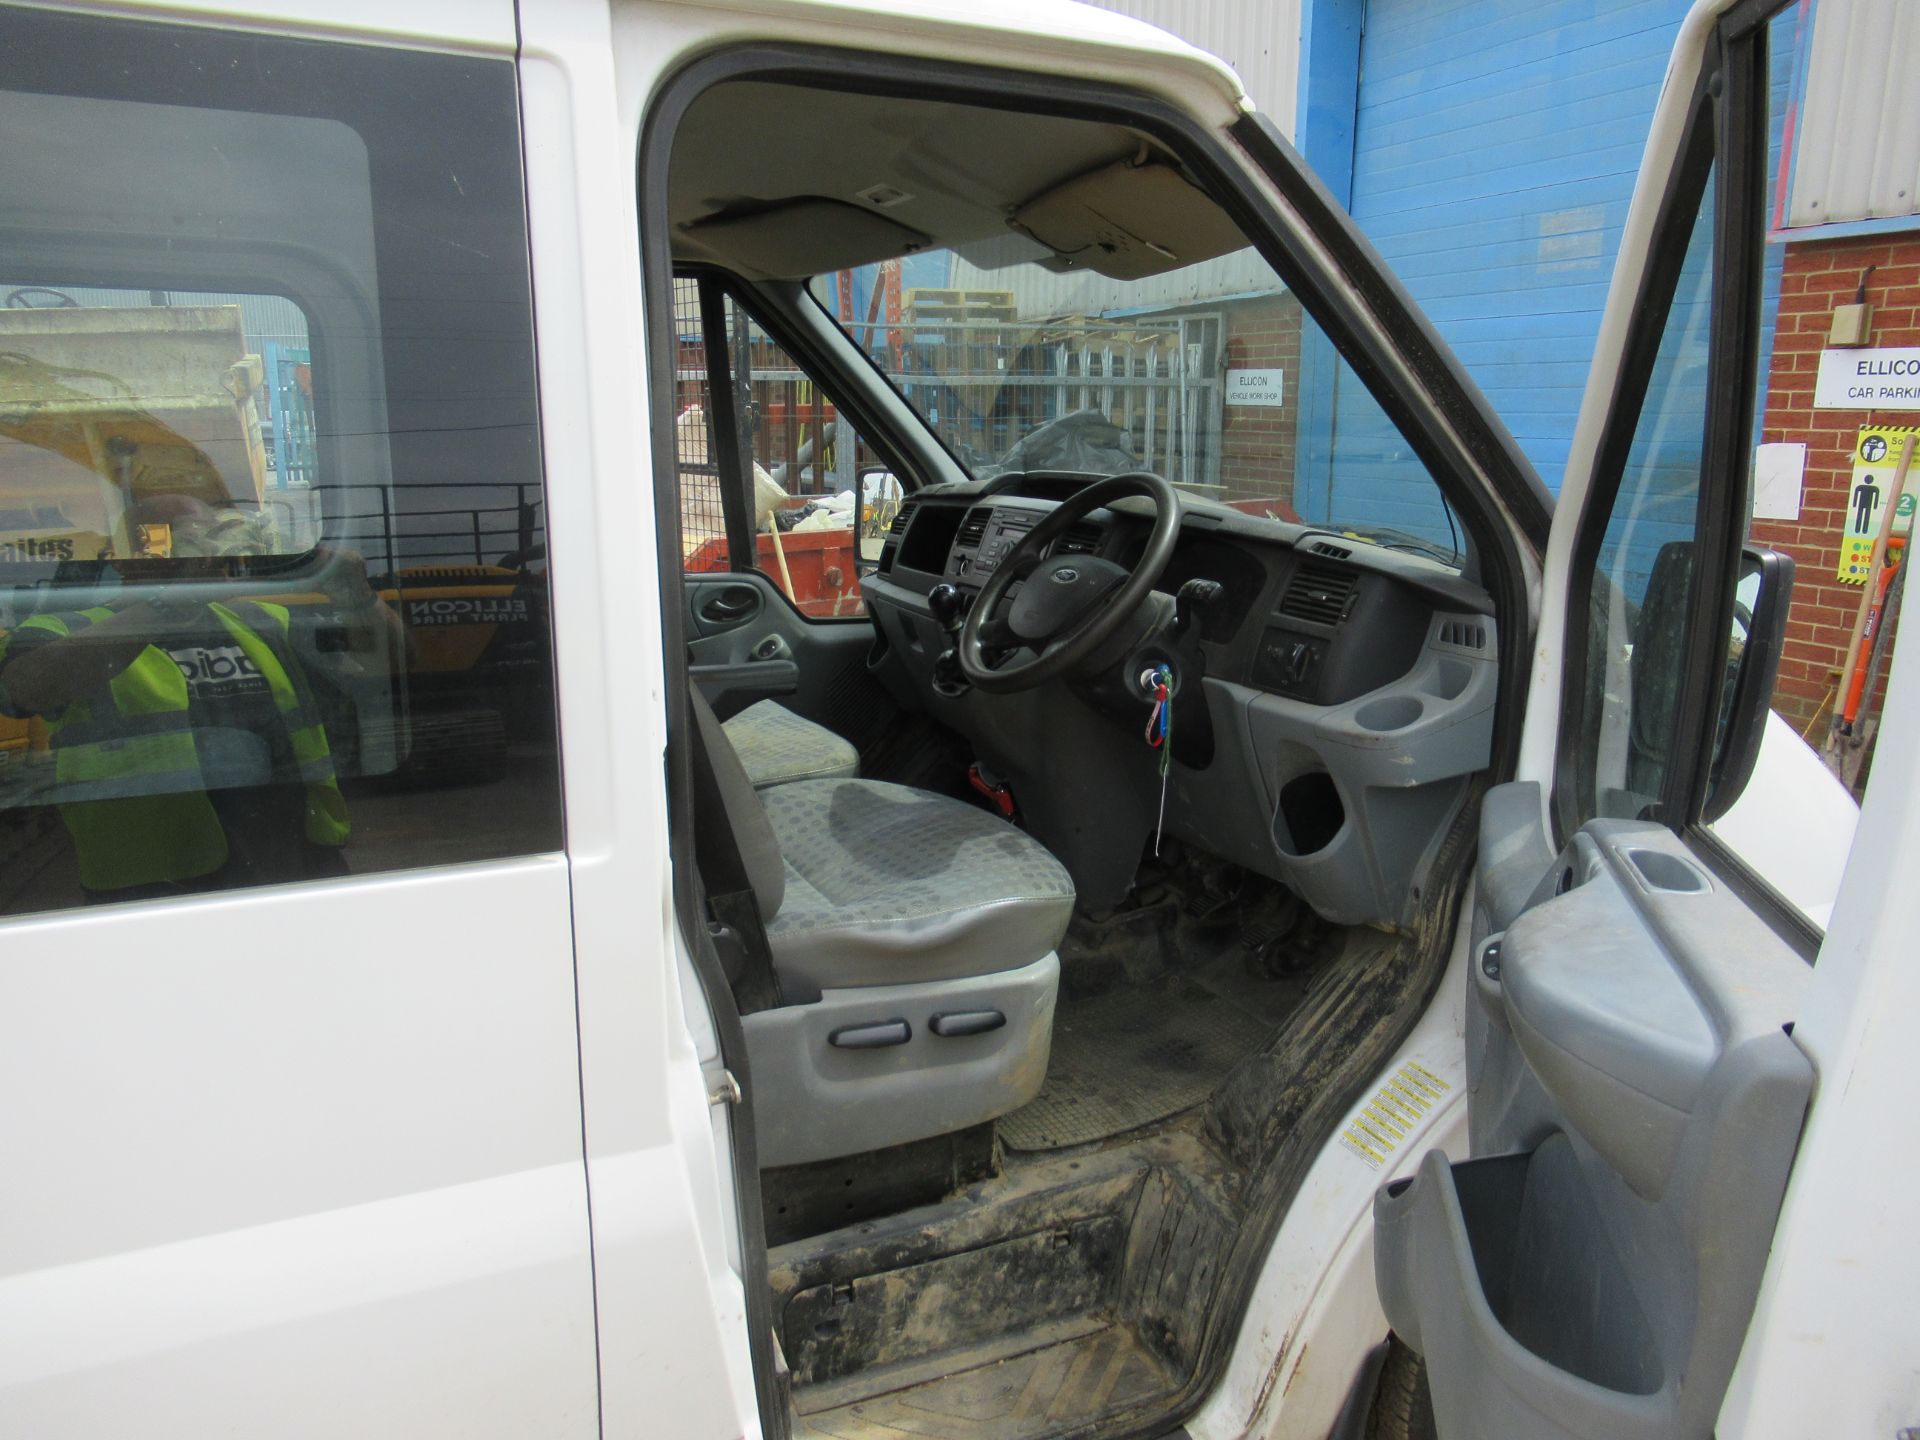 Ford Transit 100 T280 FWD diesel panel van (2014) reg no HV14 CSF - Image 8 of 10